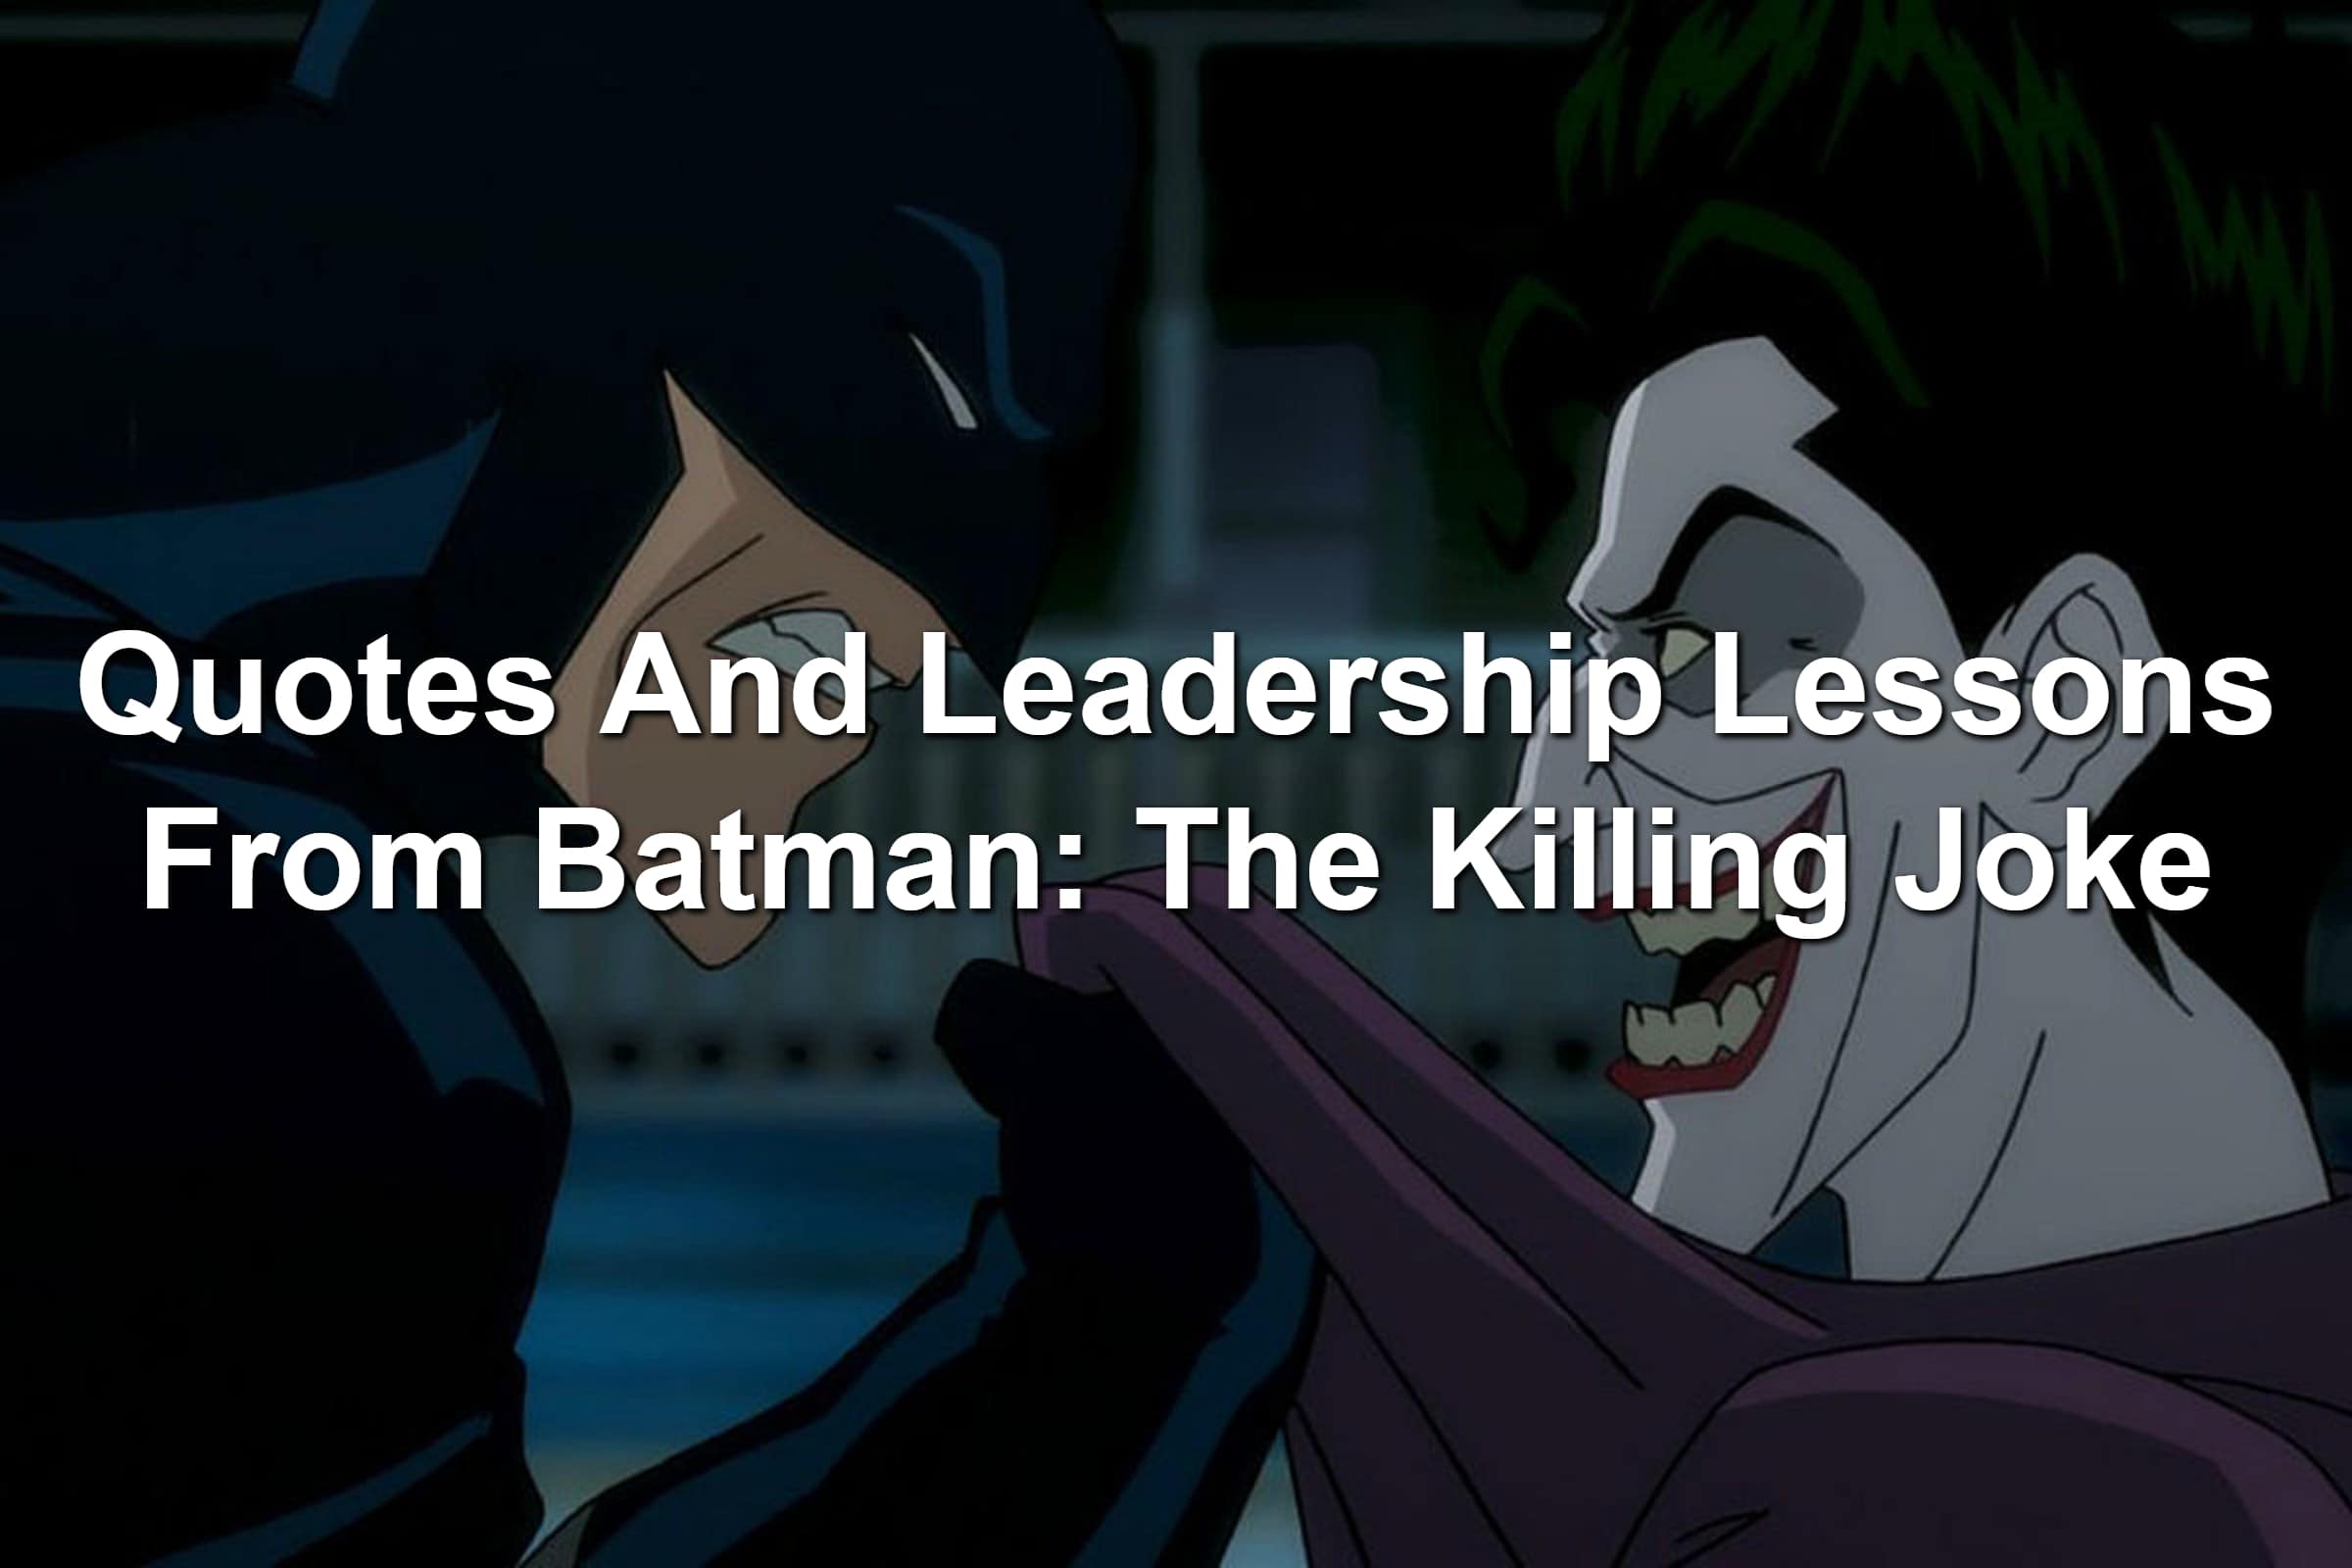 Batman and Joker still from Batman: The Killing Joke